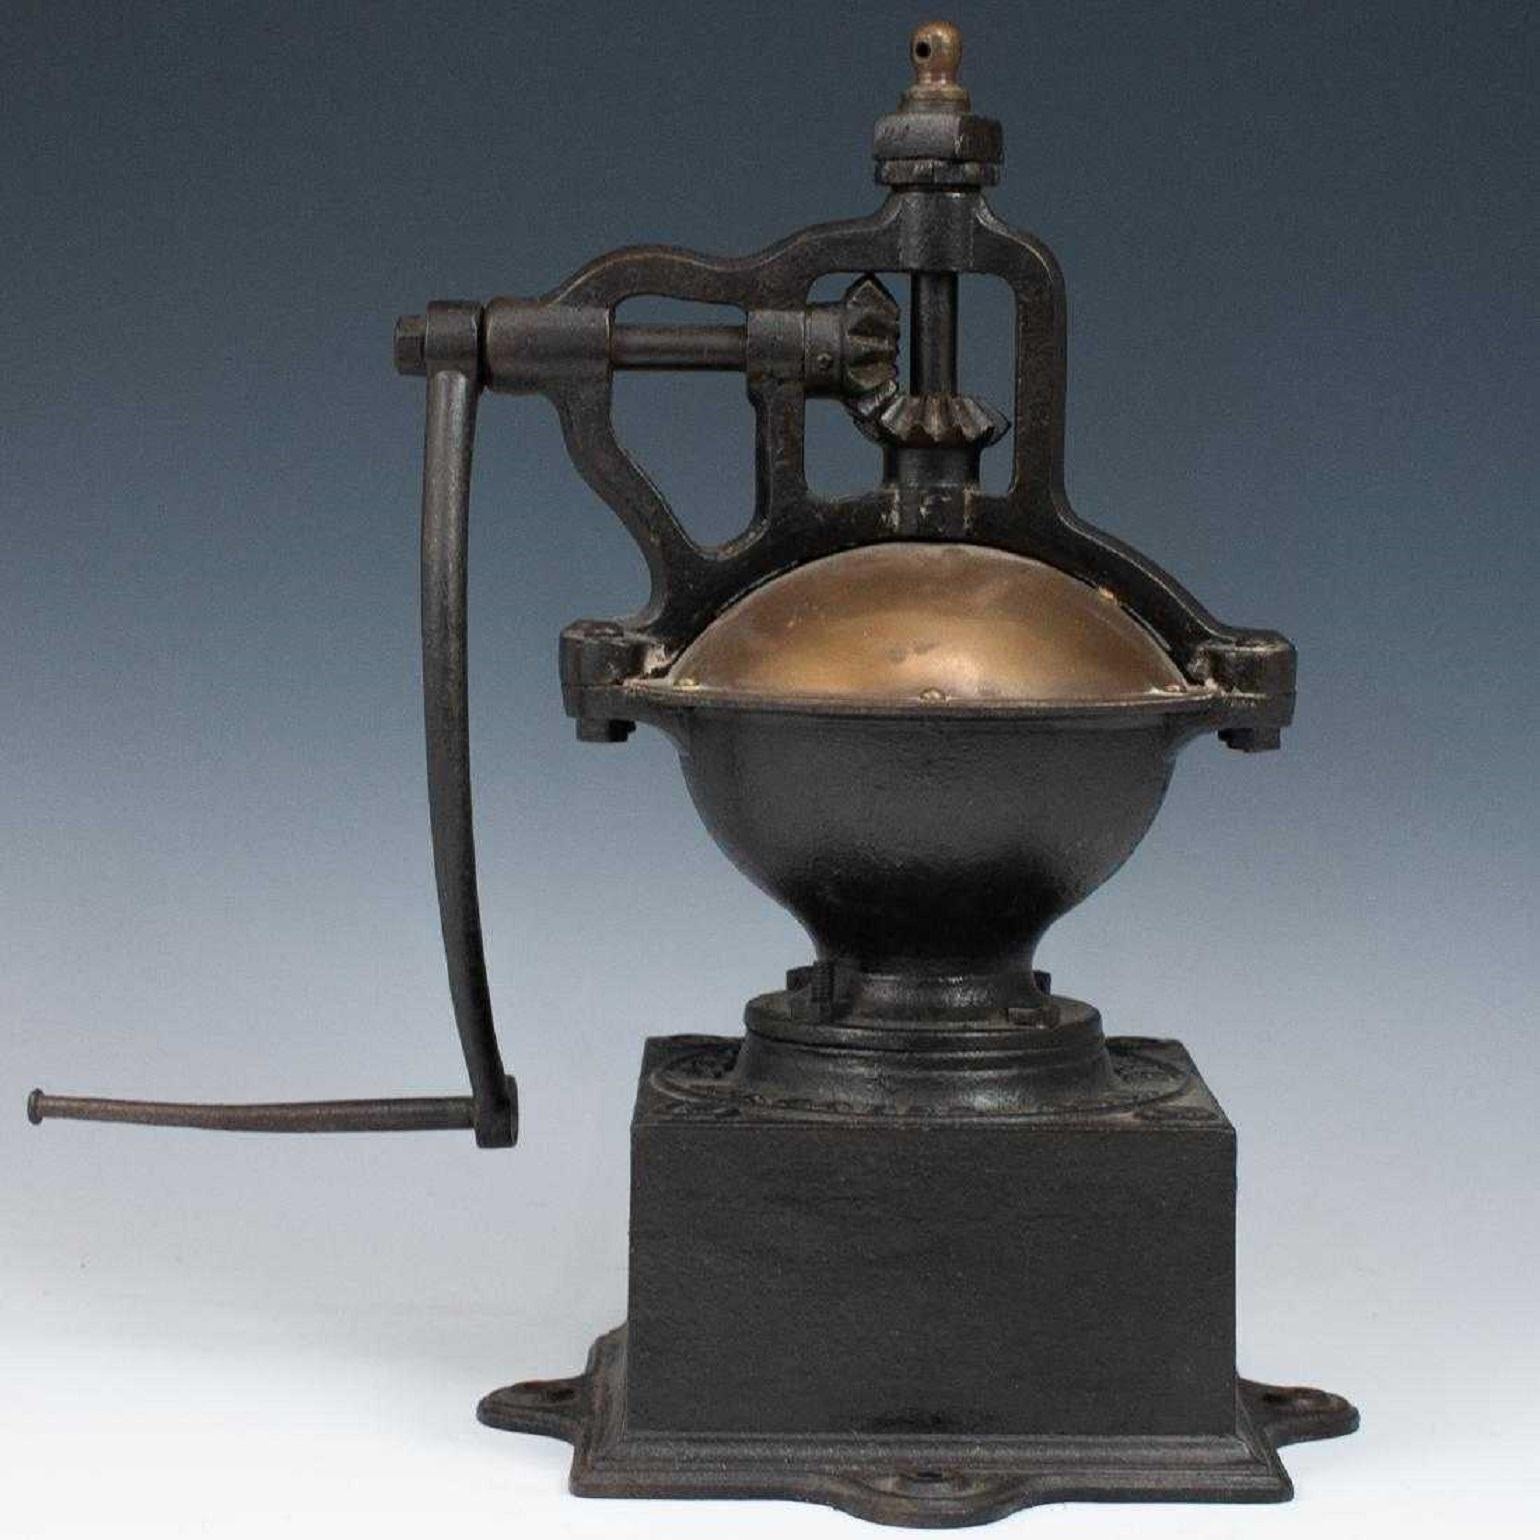 Unknown Still-Life Sculpture - Antique, 19th C. Peugeot Frères Brevetés French Coffee Grinder Table Sculpture